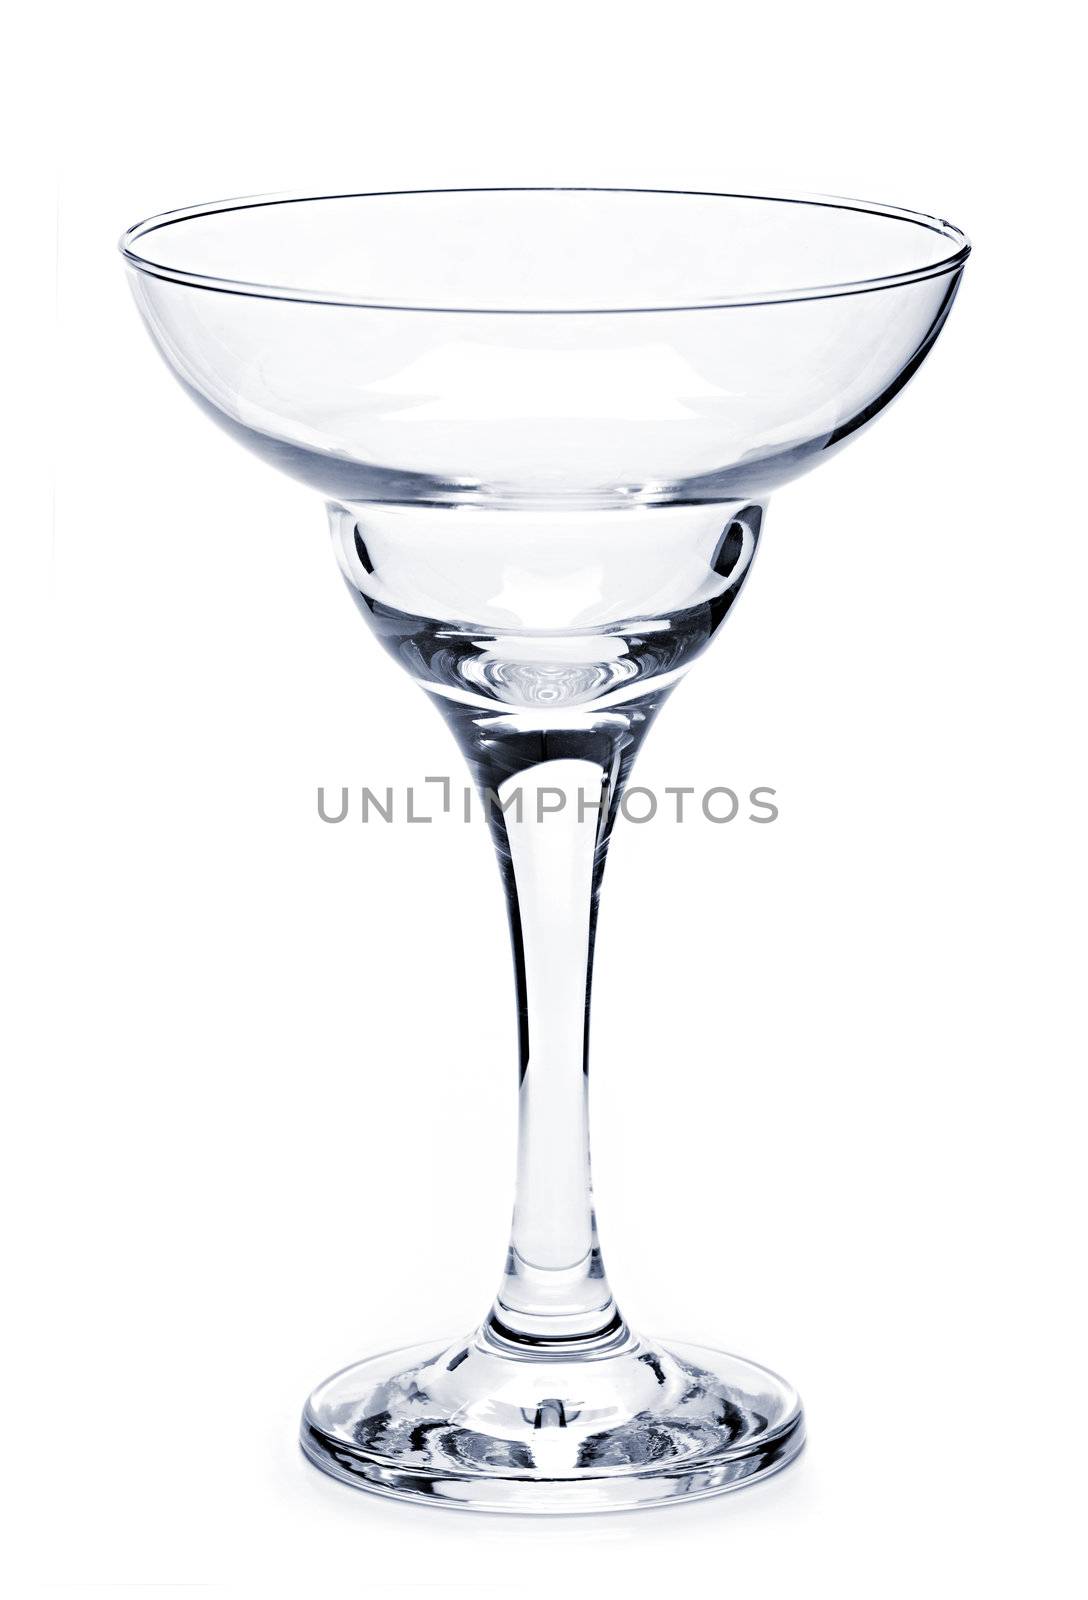 Empty margarita glass isolated on white background